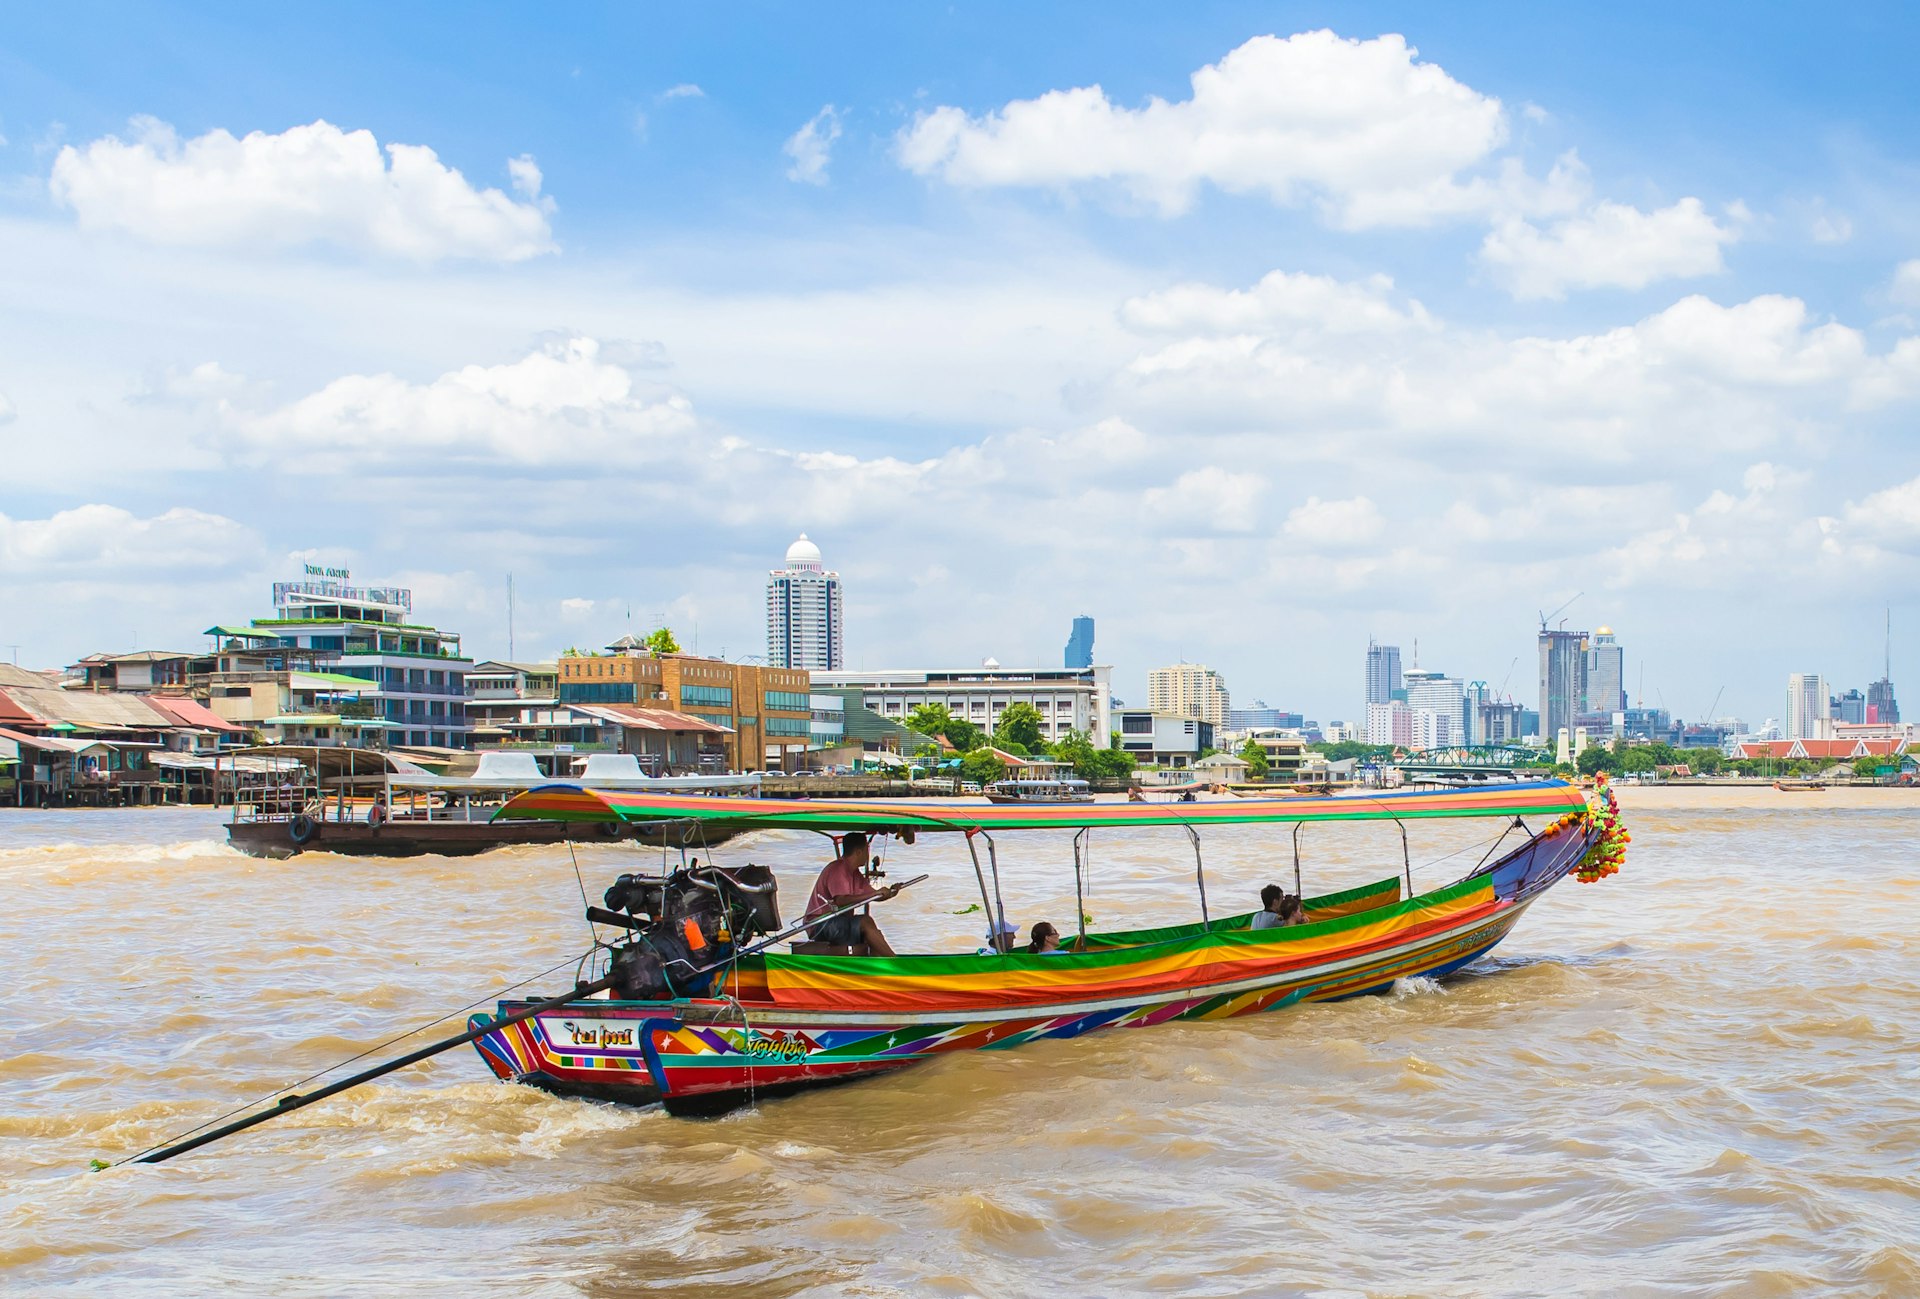 A chartered long-tail boat on the Chao Phraya river, Bangkok